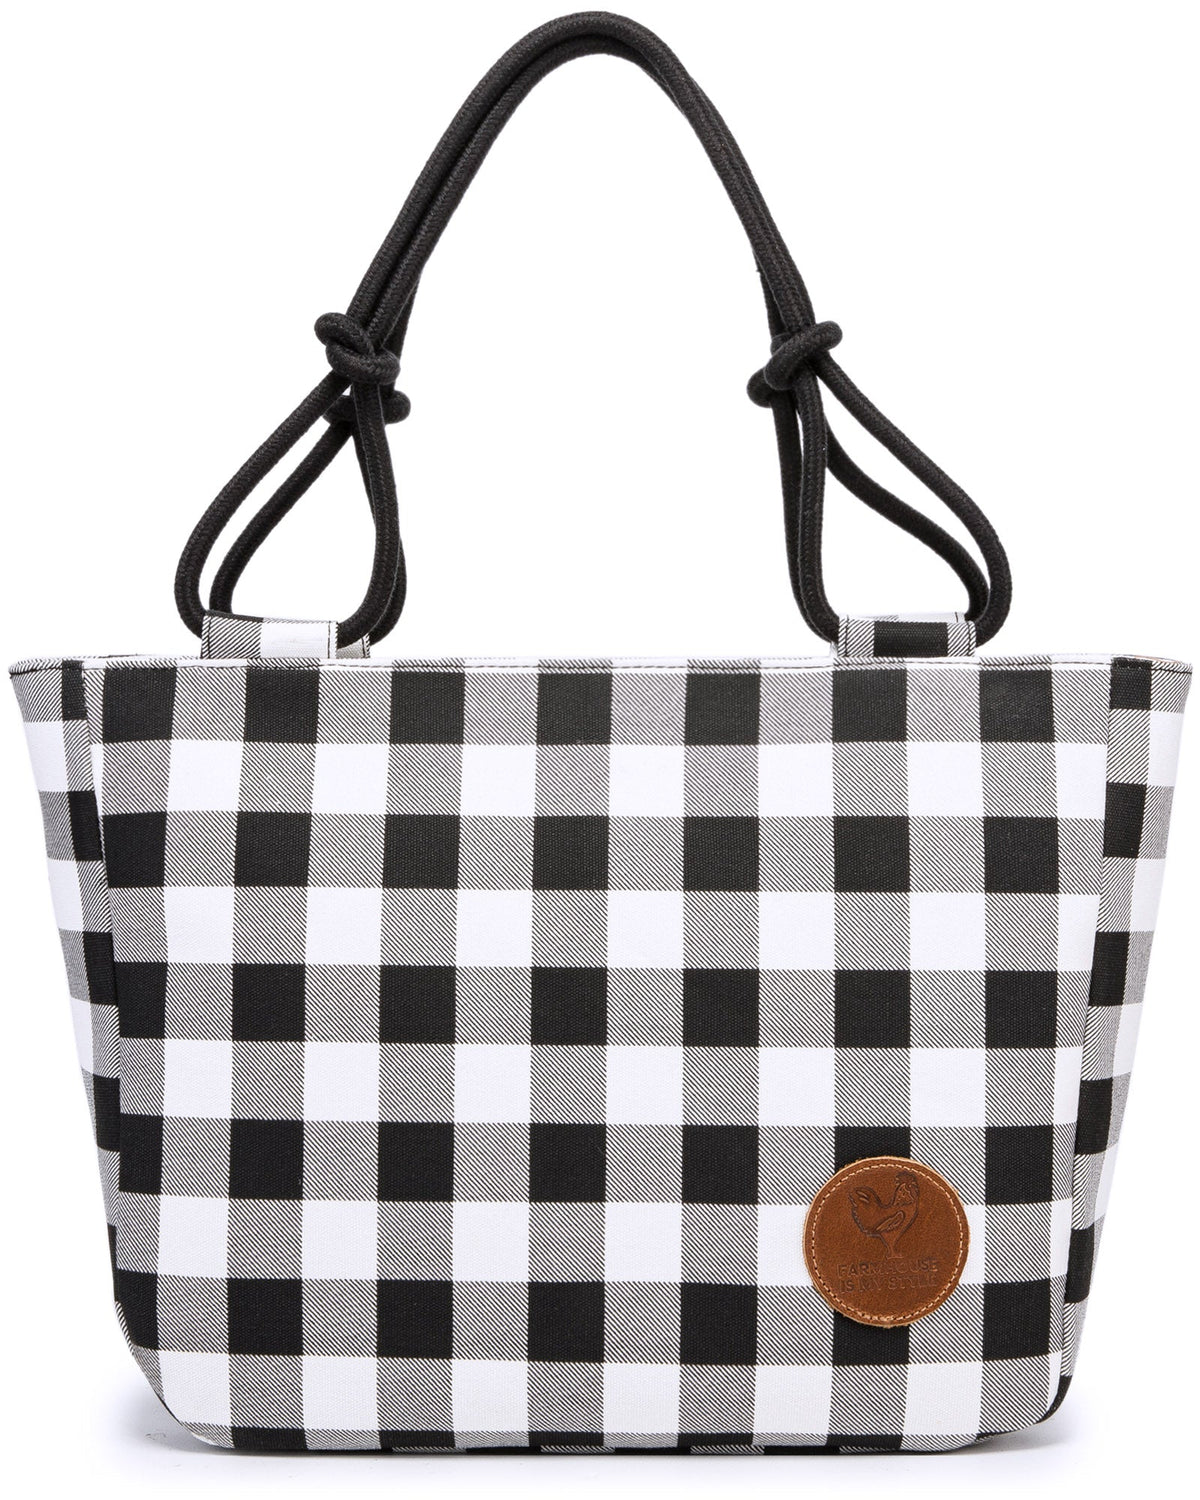 Checkered Pattern: Black & White Tote Bag